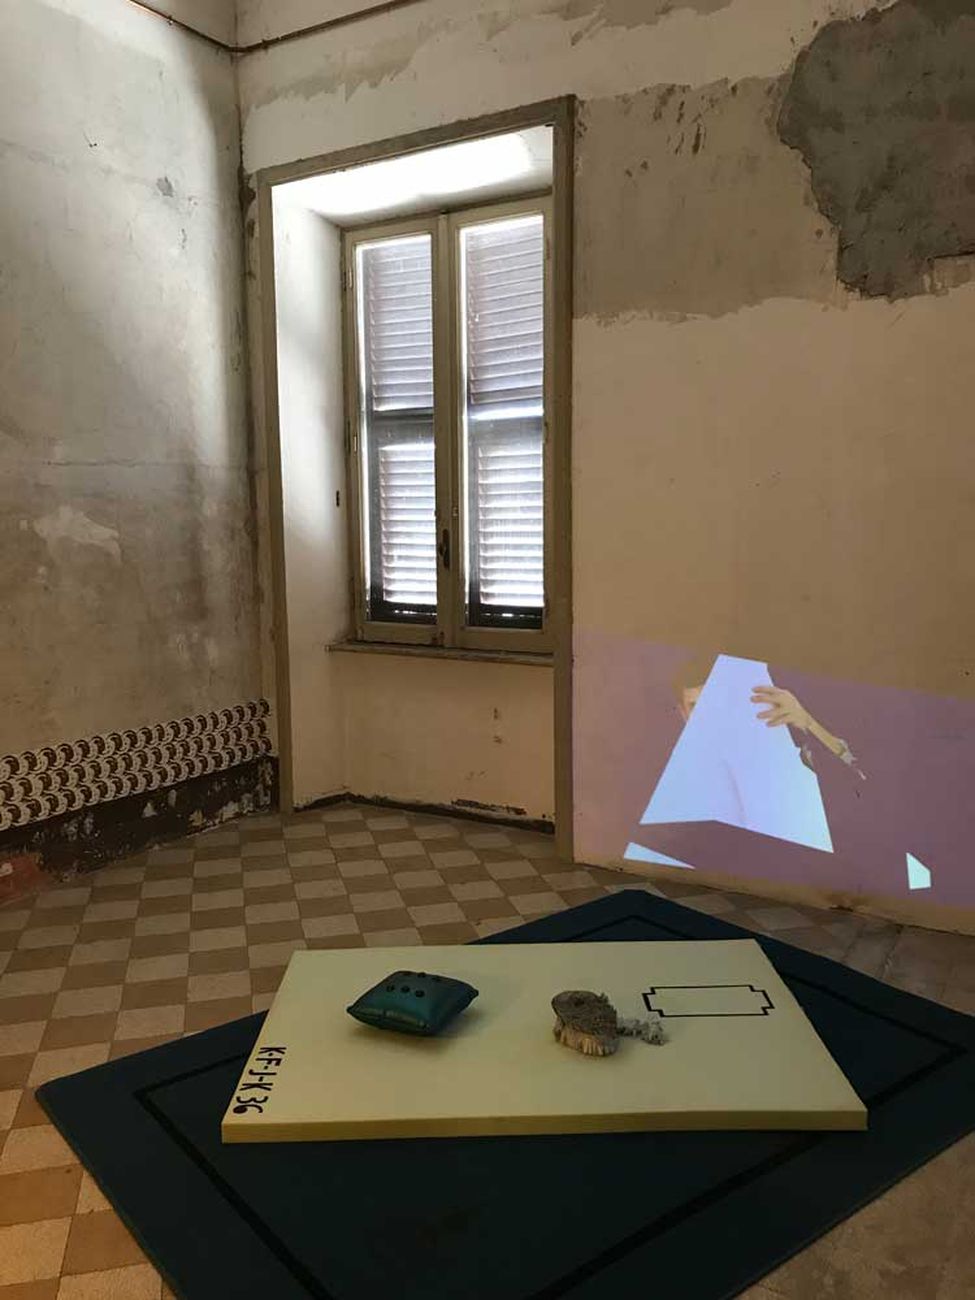 Ola Vasiljeva. Installation view at Indipendenza Studio, Roma 2018